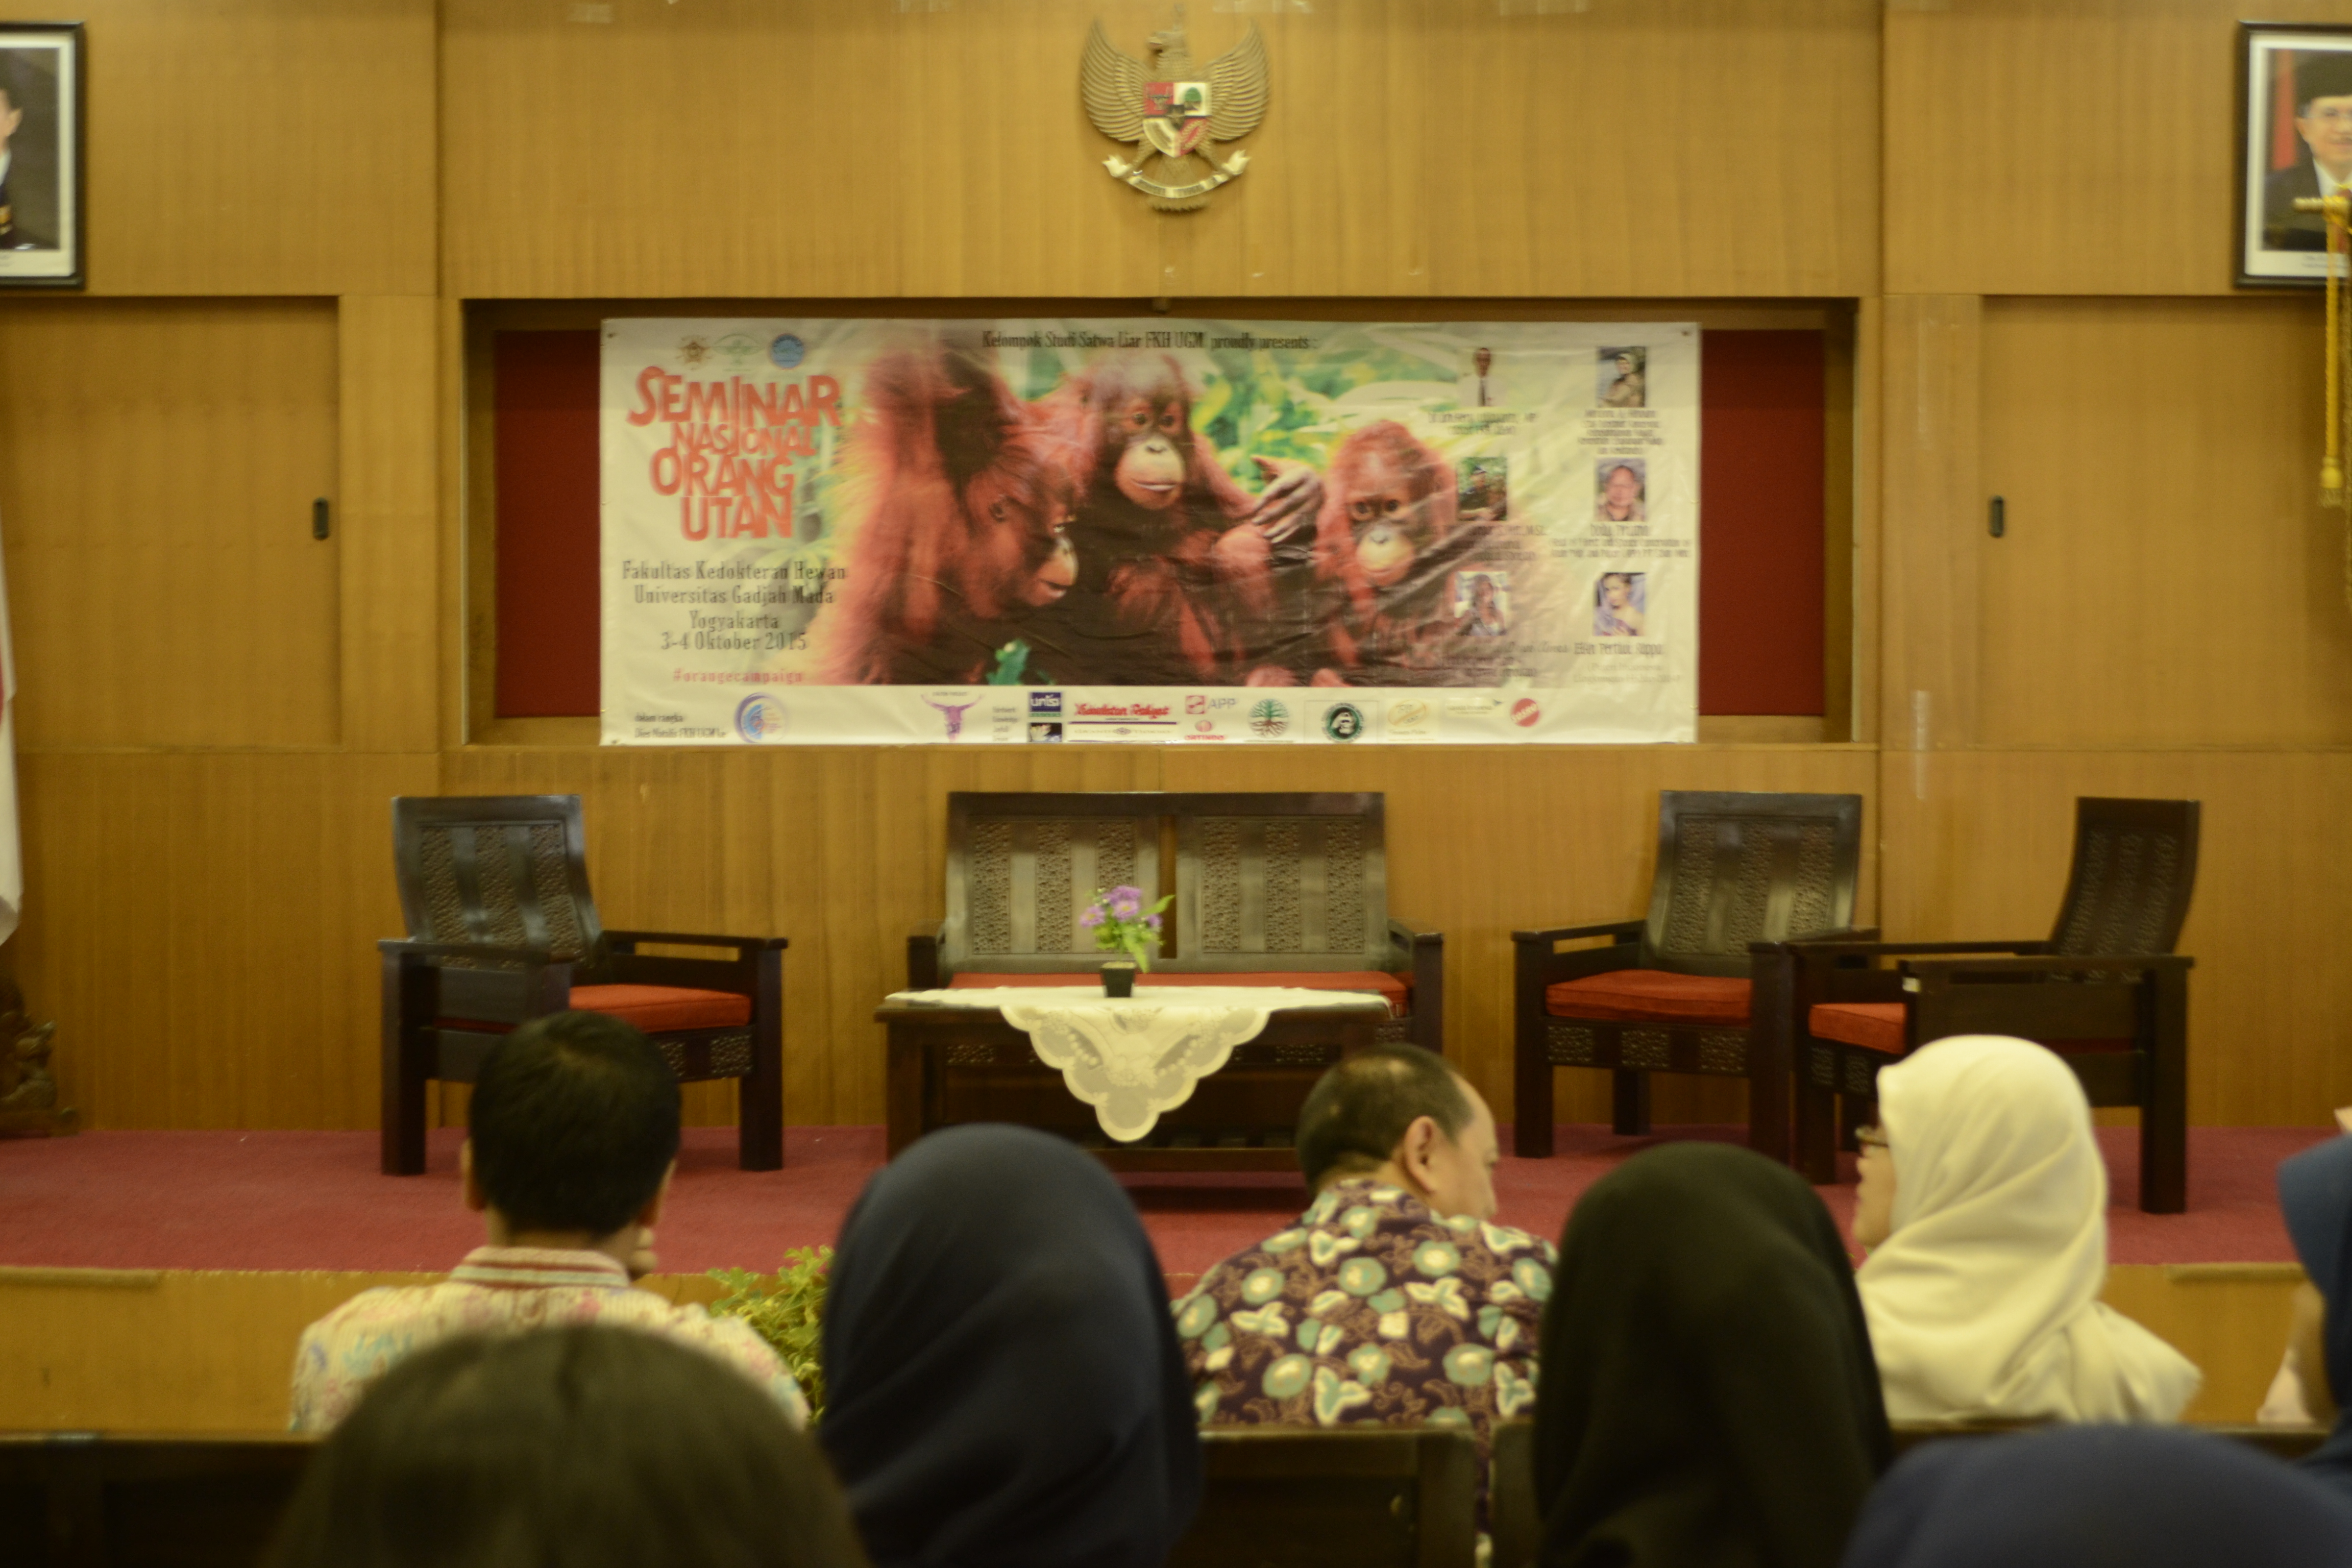 Acara Seminar Nasional dan Short Course Penyelamatan Orangutan yang berlangsung dari tanggal 3 sampai 4 Oktober 2015 dihadiri enam Fakultas Kedokteran Hewan